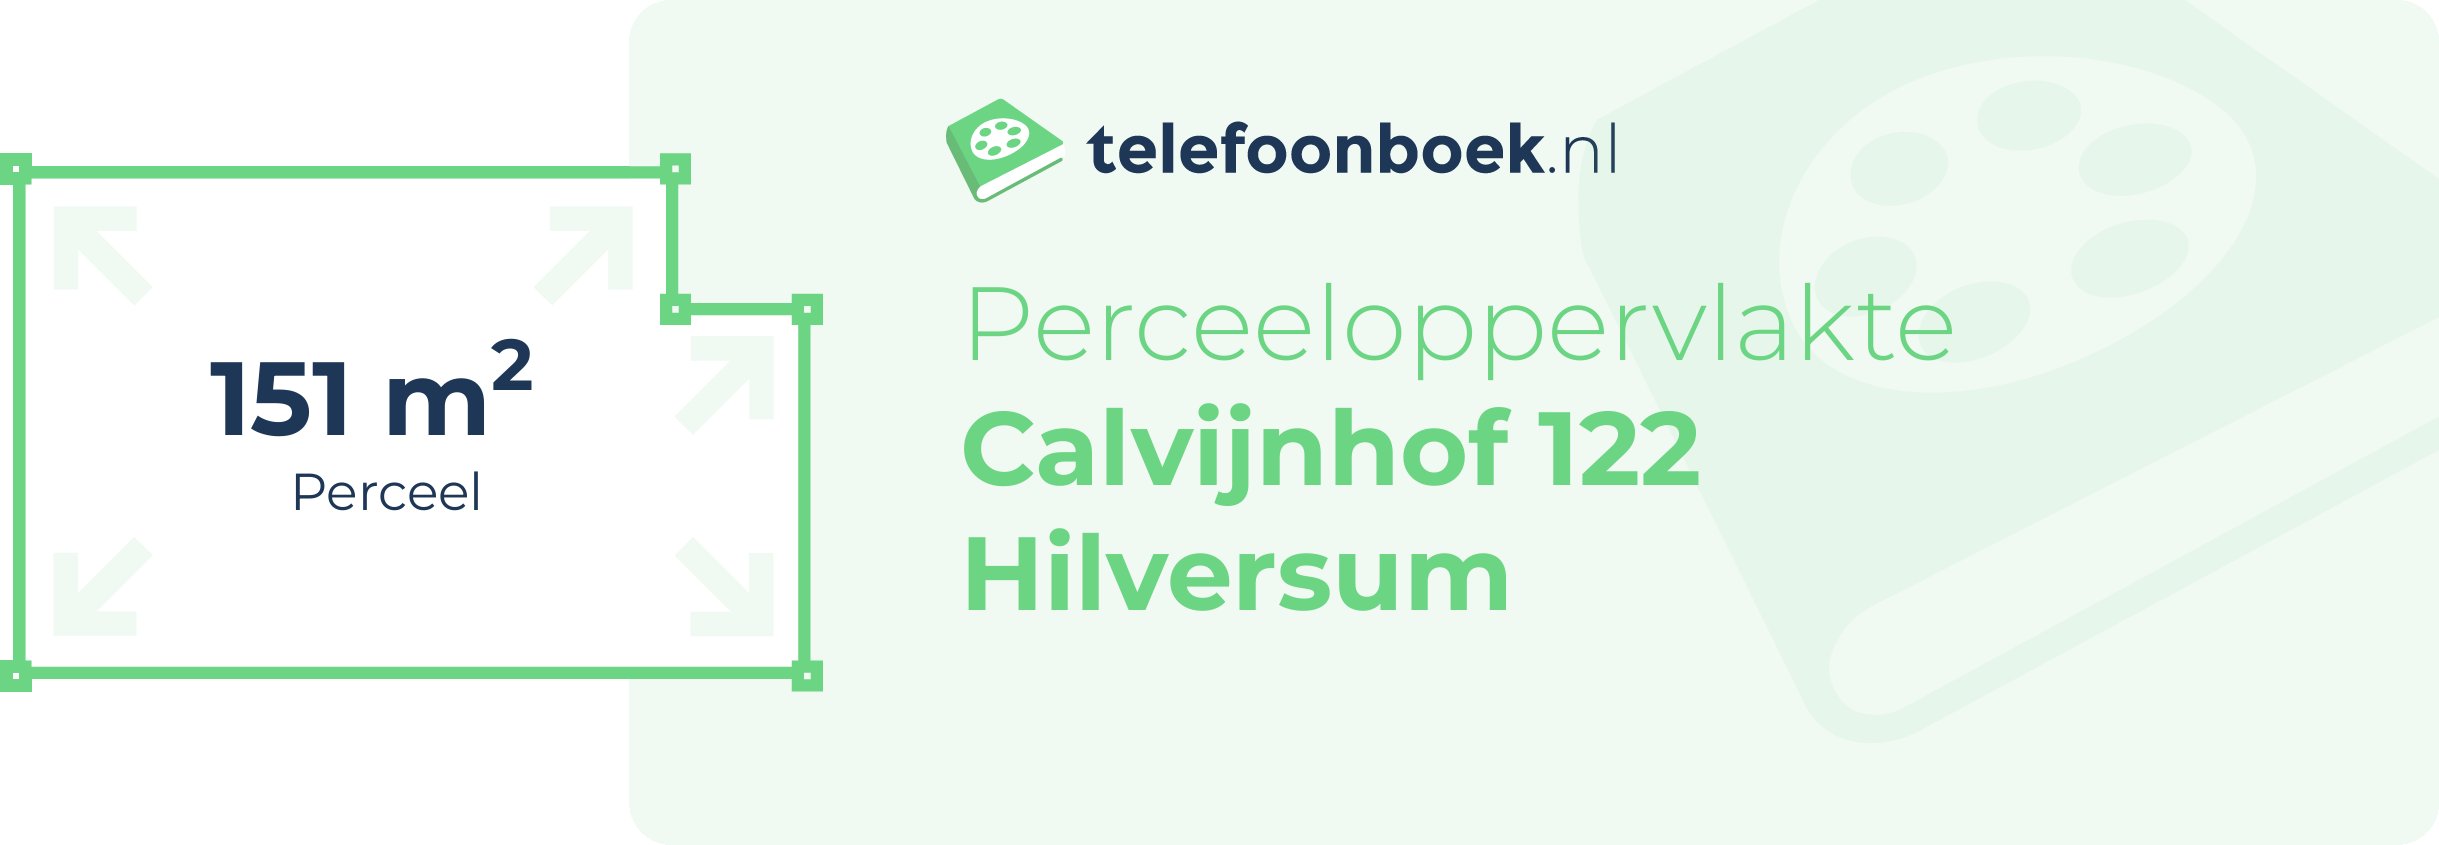 Perceeloppervlakte Calvijnhof 122 Hilversum